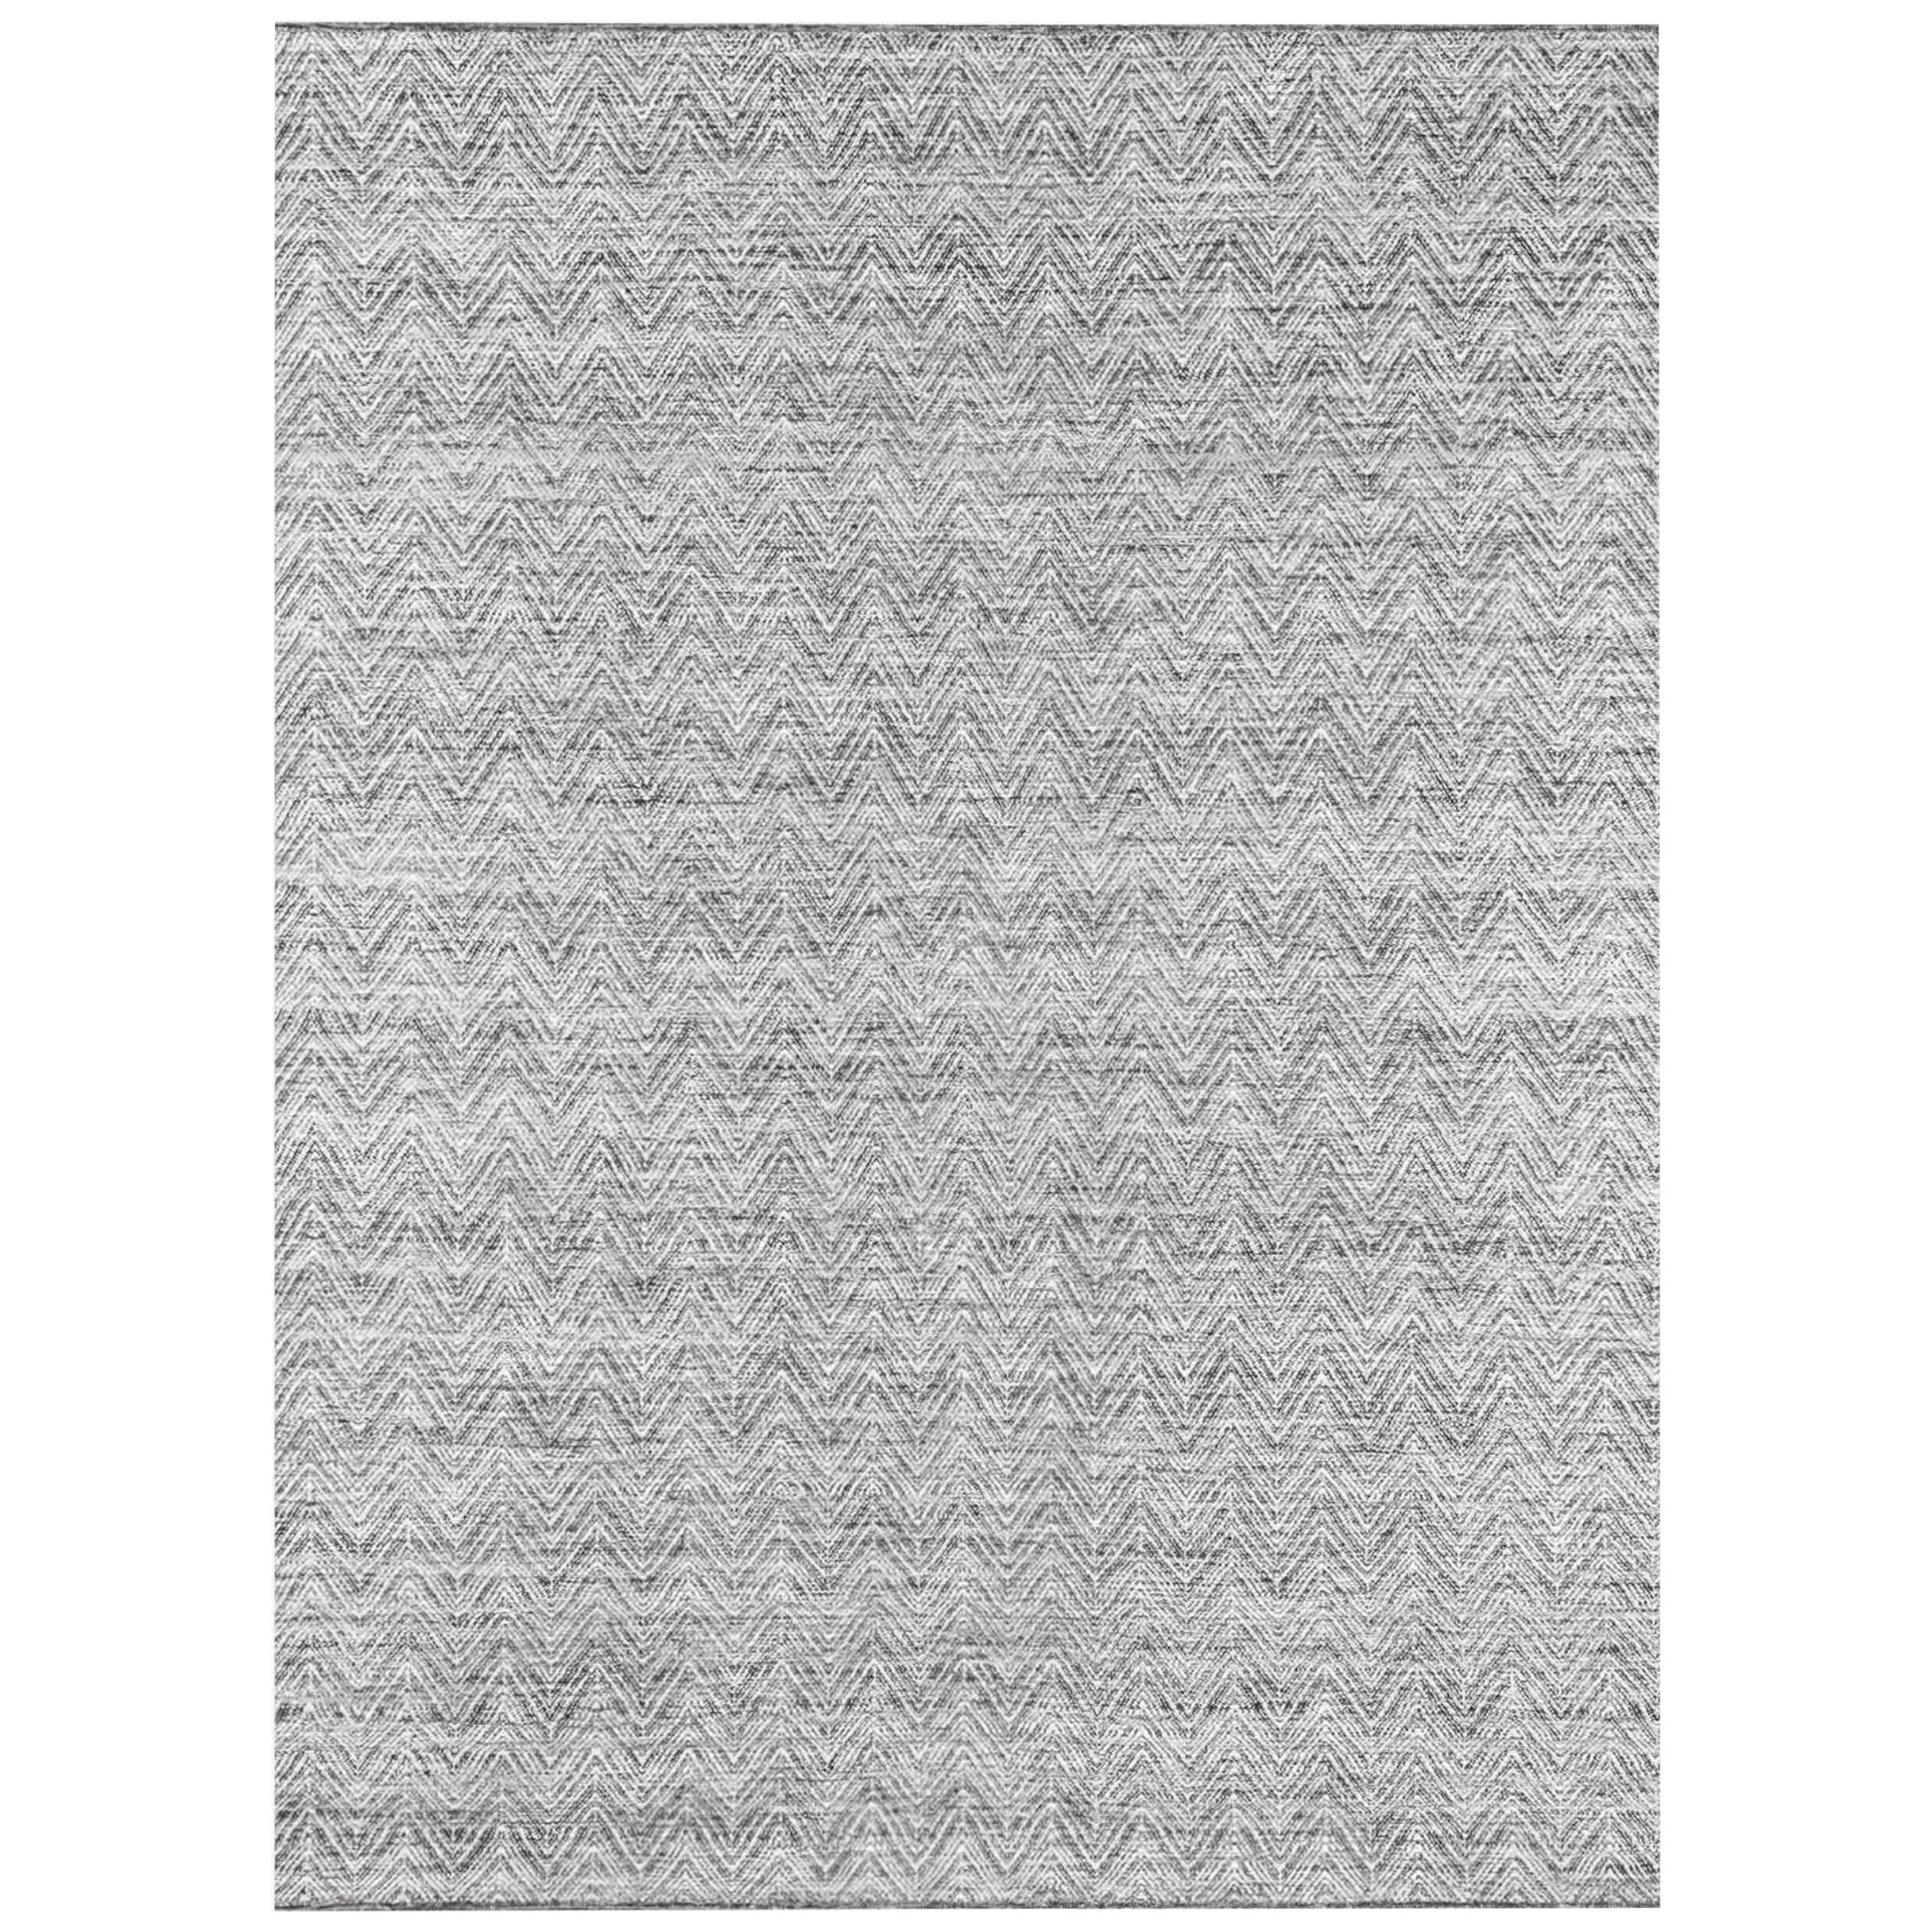 For Sale: Black (Charcoal) Ben Soleimani Ceyah Rug– Hand-woven Plush Textured Wool + Linen Charcoal 8'x10'